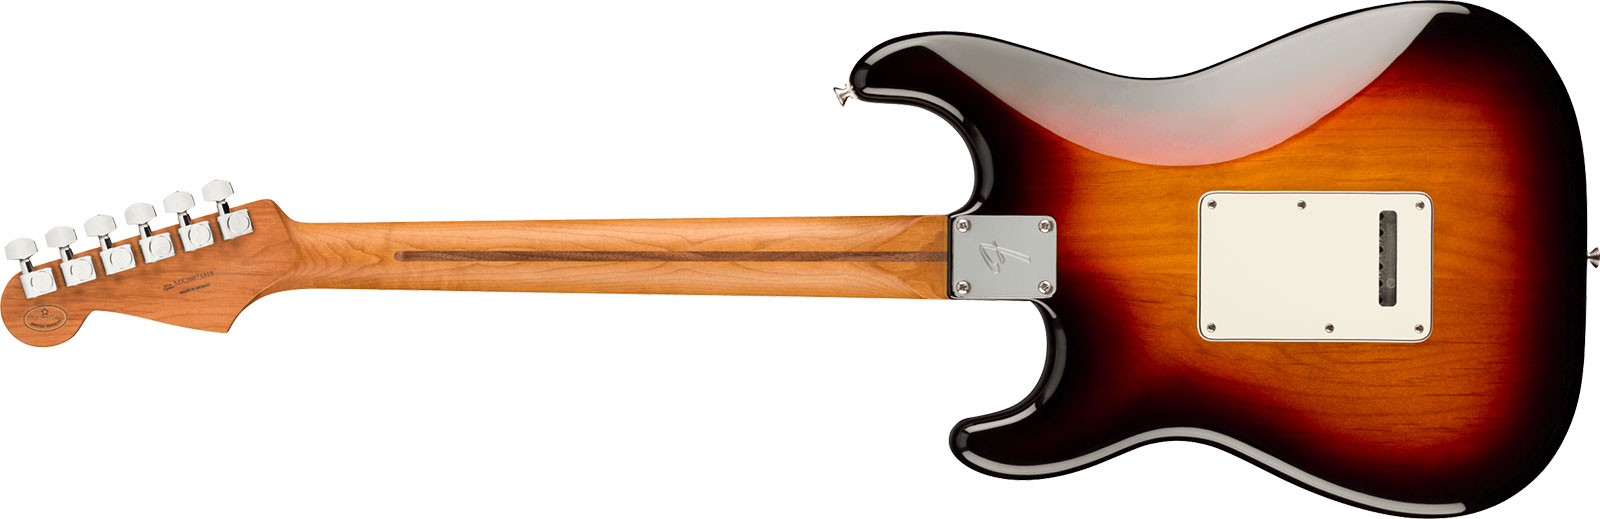 Fender Strat Player Roasted Maple Neck Ltd Mex 3s Trem Mn - 3 Color Sunburst - Elektrische gitaar in Str-vorm - Variation 1